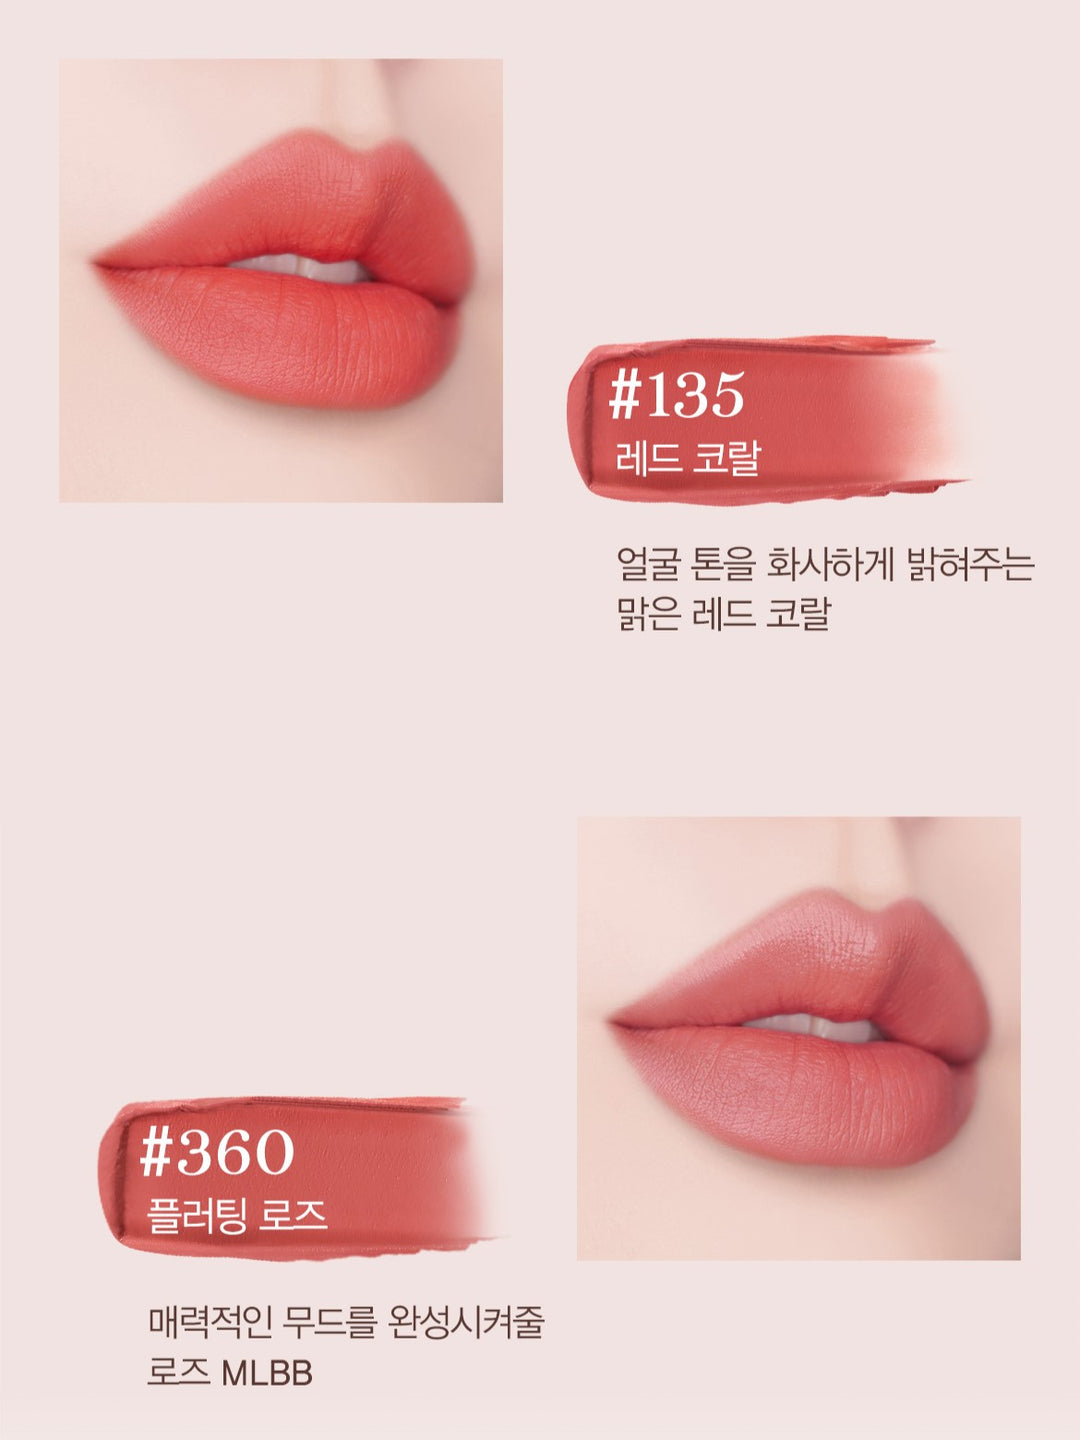 Son LANCÔME L'Absolu Rouge Intimatte Lipstick #289 French Peluche